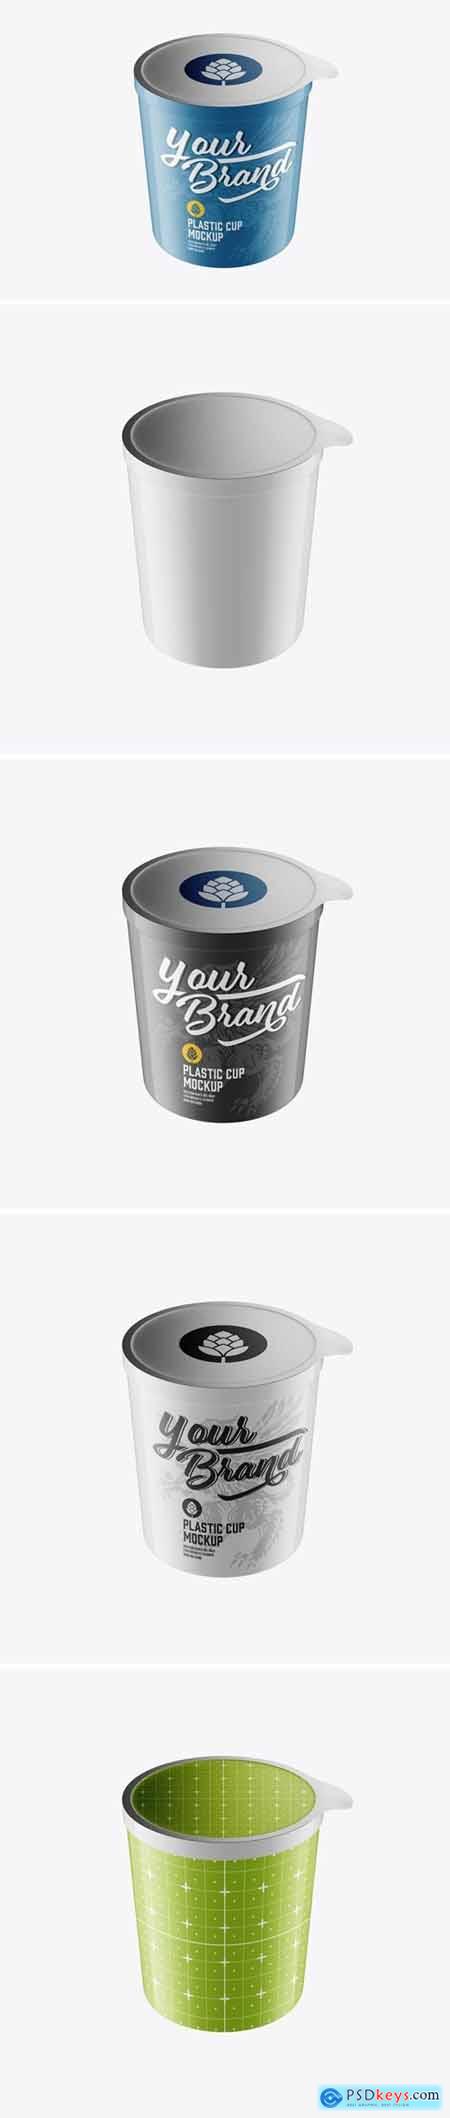 Yogurt Cup Mockup 8U6AQ9C